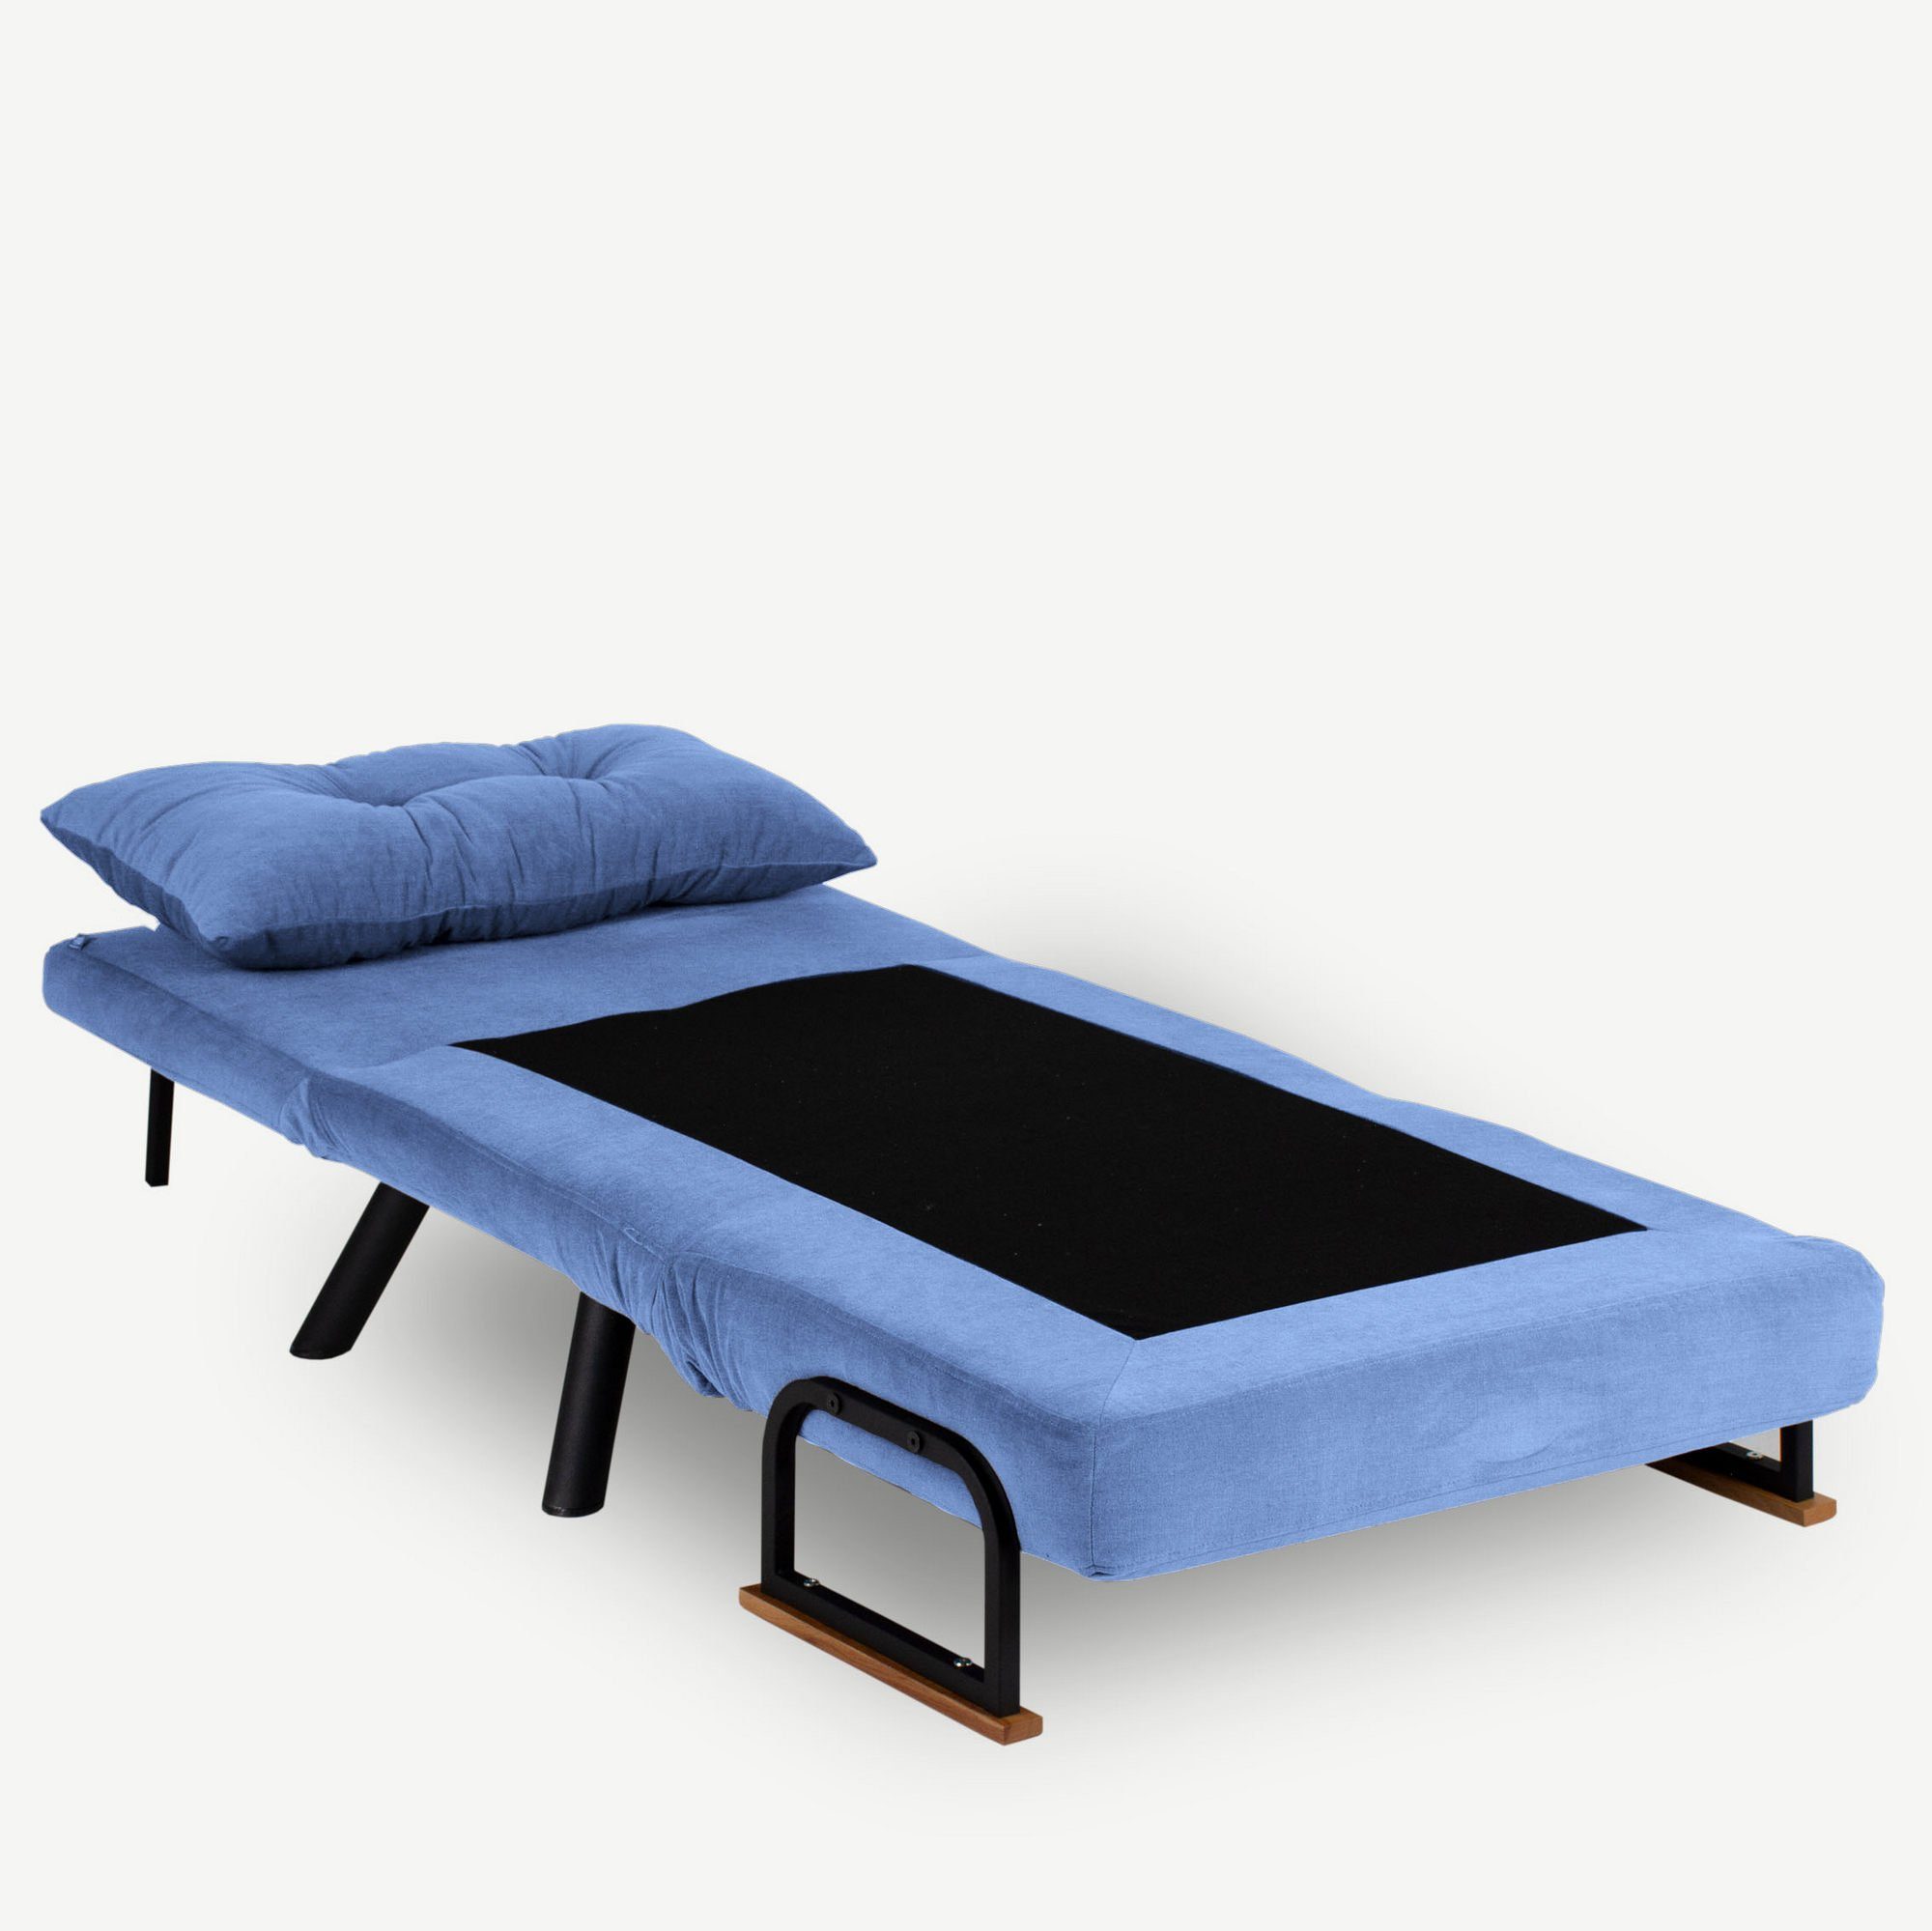 Skye Decor Sofa Metall Blau, 100% Schlafsofas, FTN2324, Rahmen